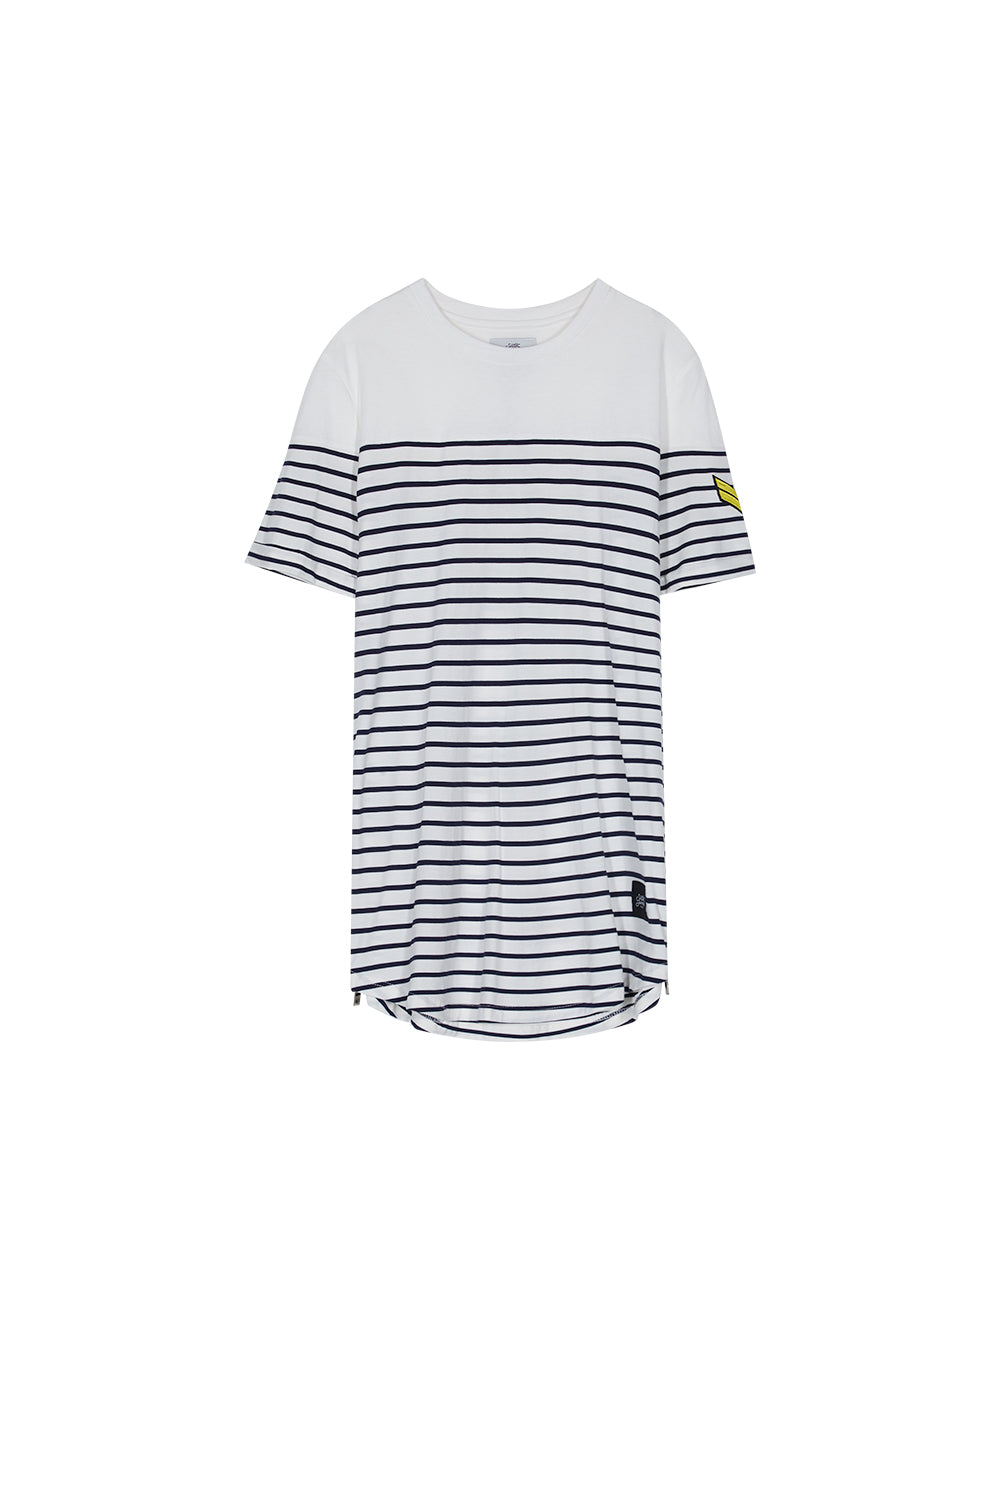 Sixth June - T-shirt marinière patch chevron bleu blanc